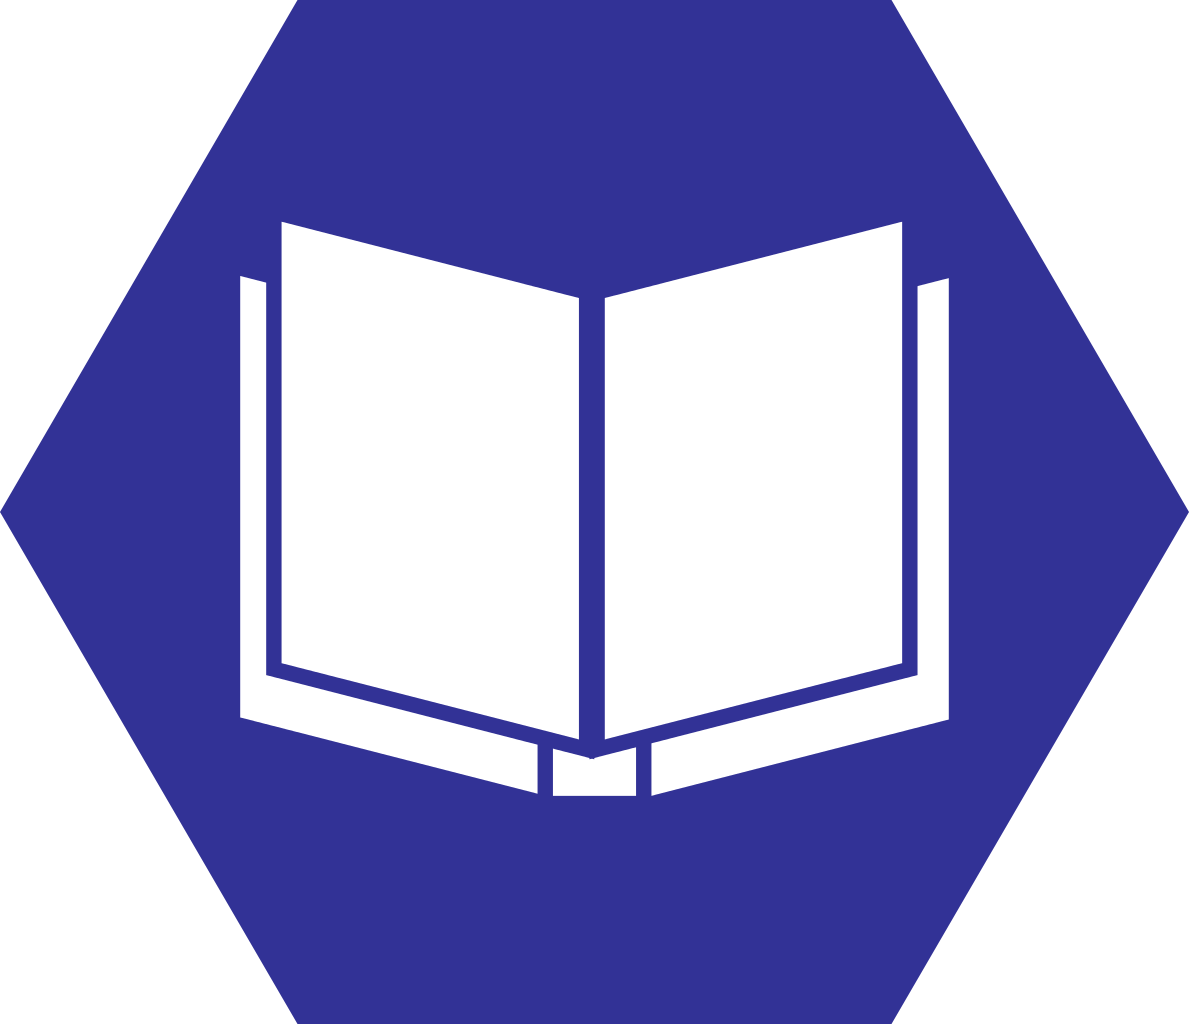 Hexagon clipart purple. File book hexagonal icon